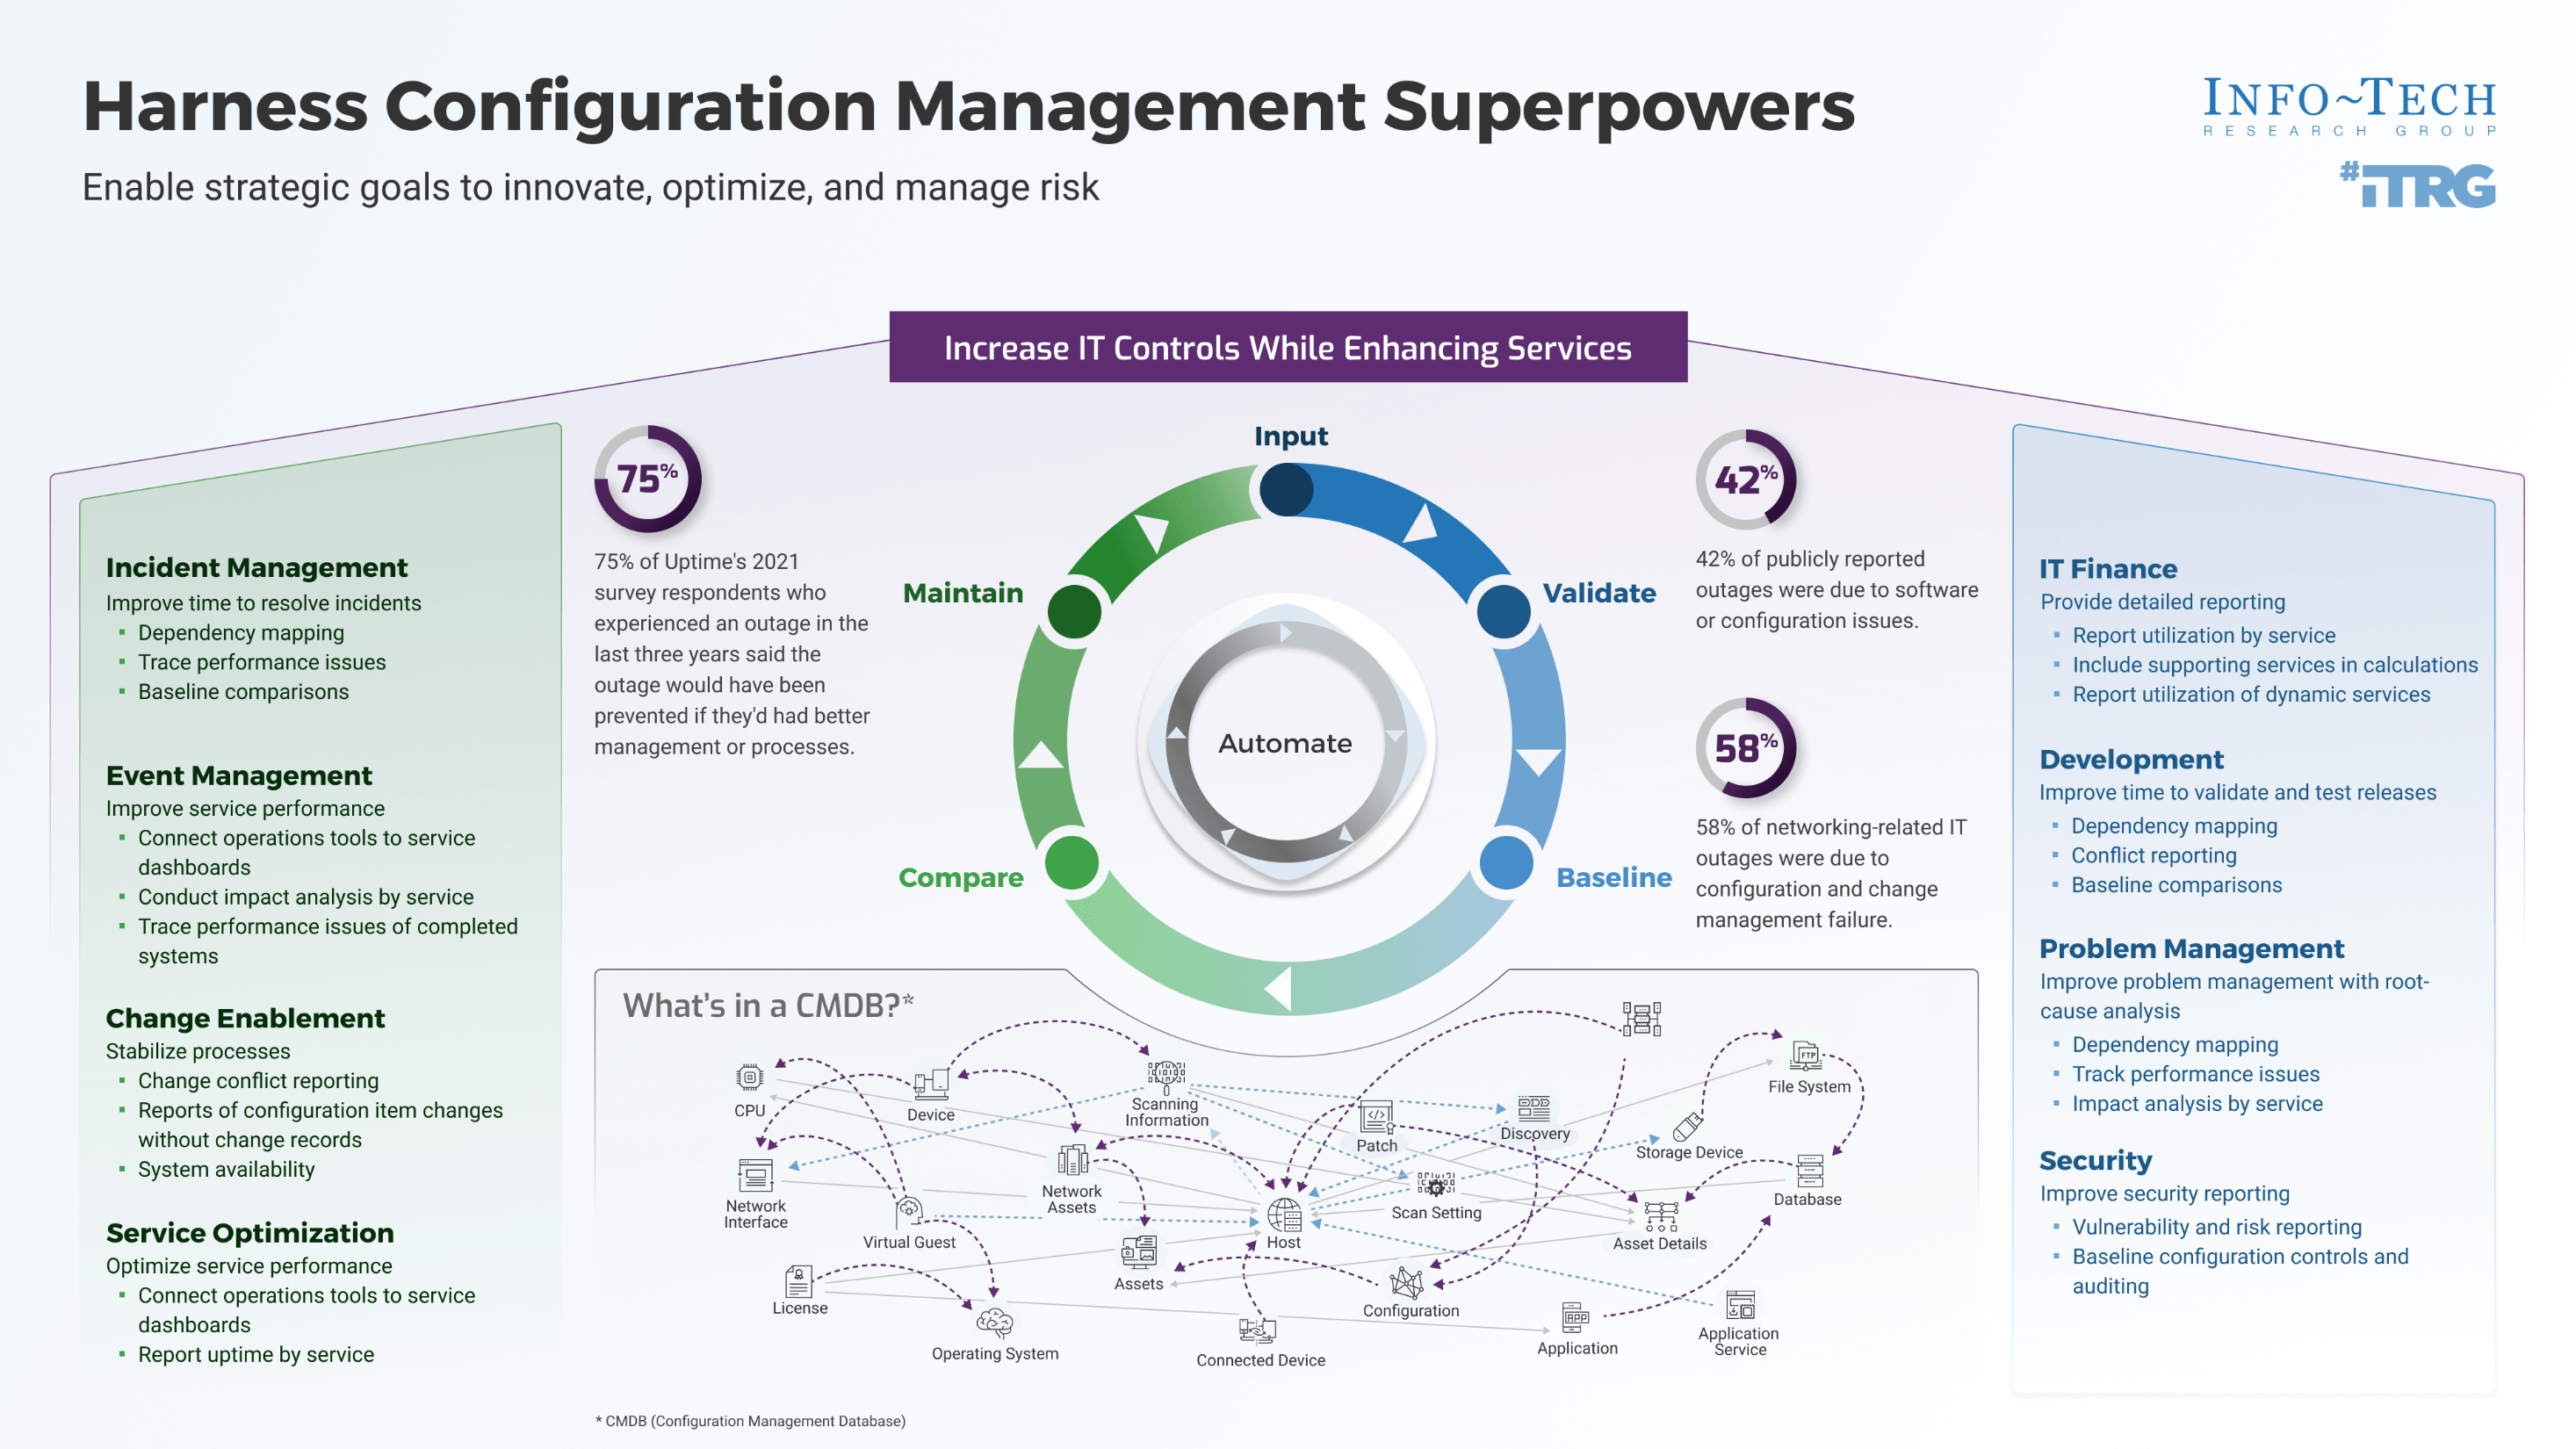 Info-Tech's Harness Configuration Management Superpowers.